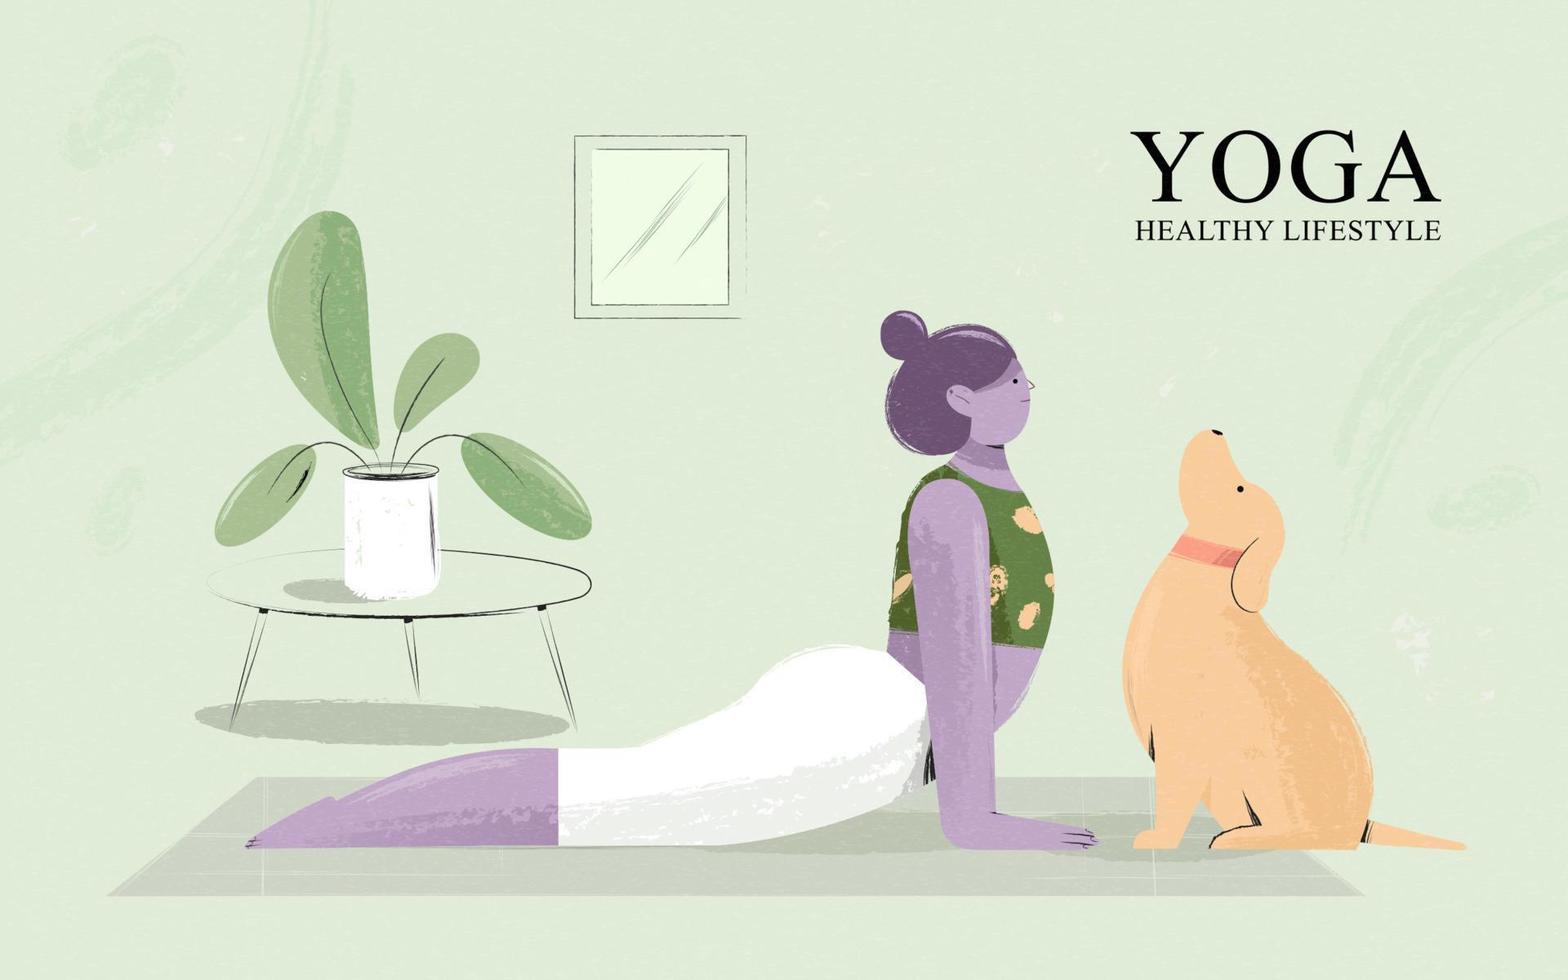 aptitud niña haciendo cobra actitud yoga con mascota perro a hogar. hogar rutina de ejercicio o yoga sano estilo de vida concepto. vector